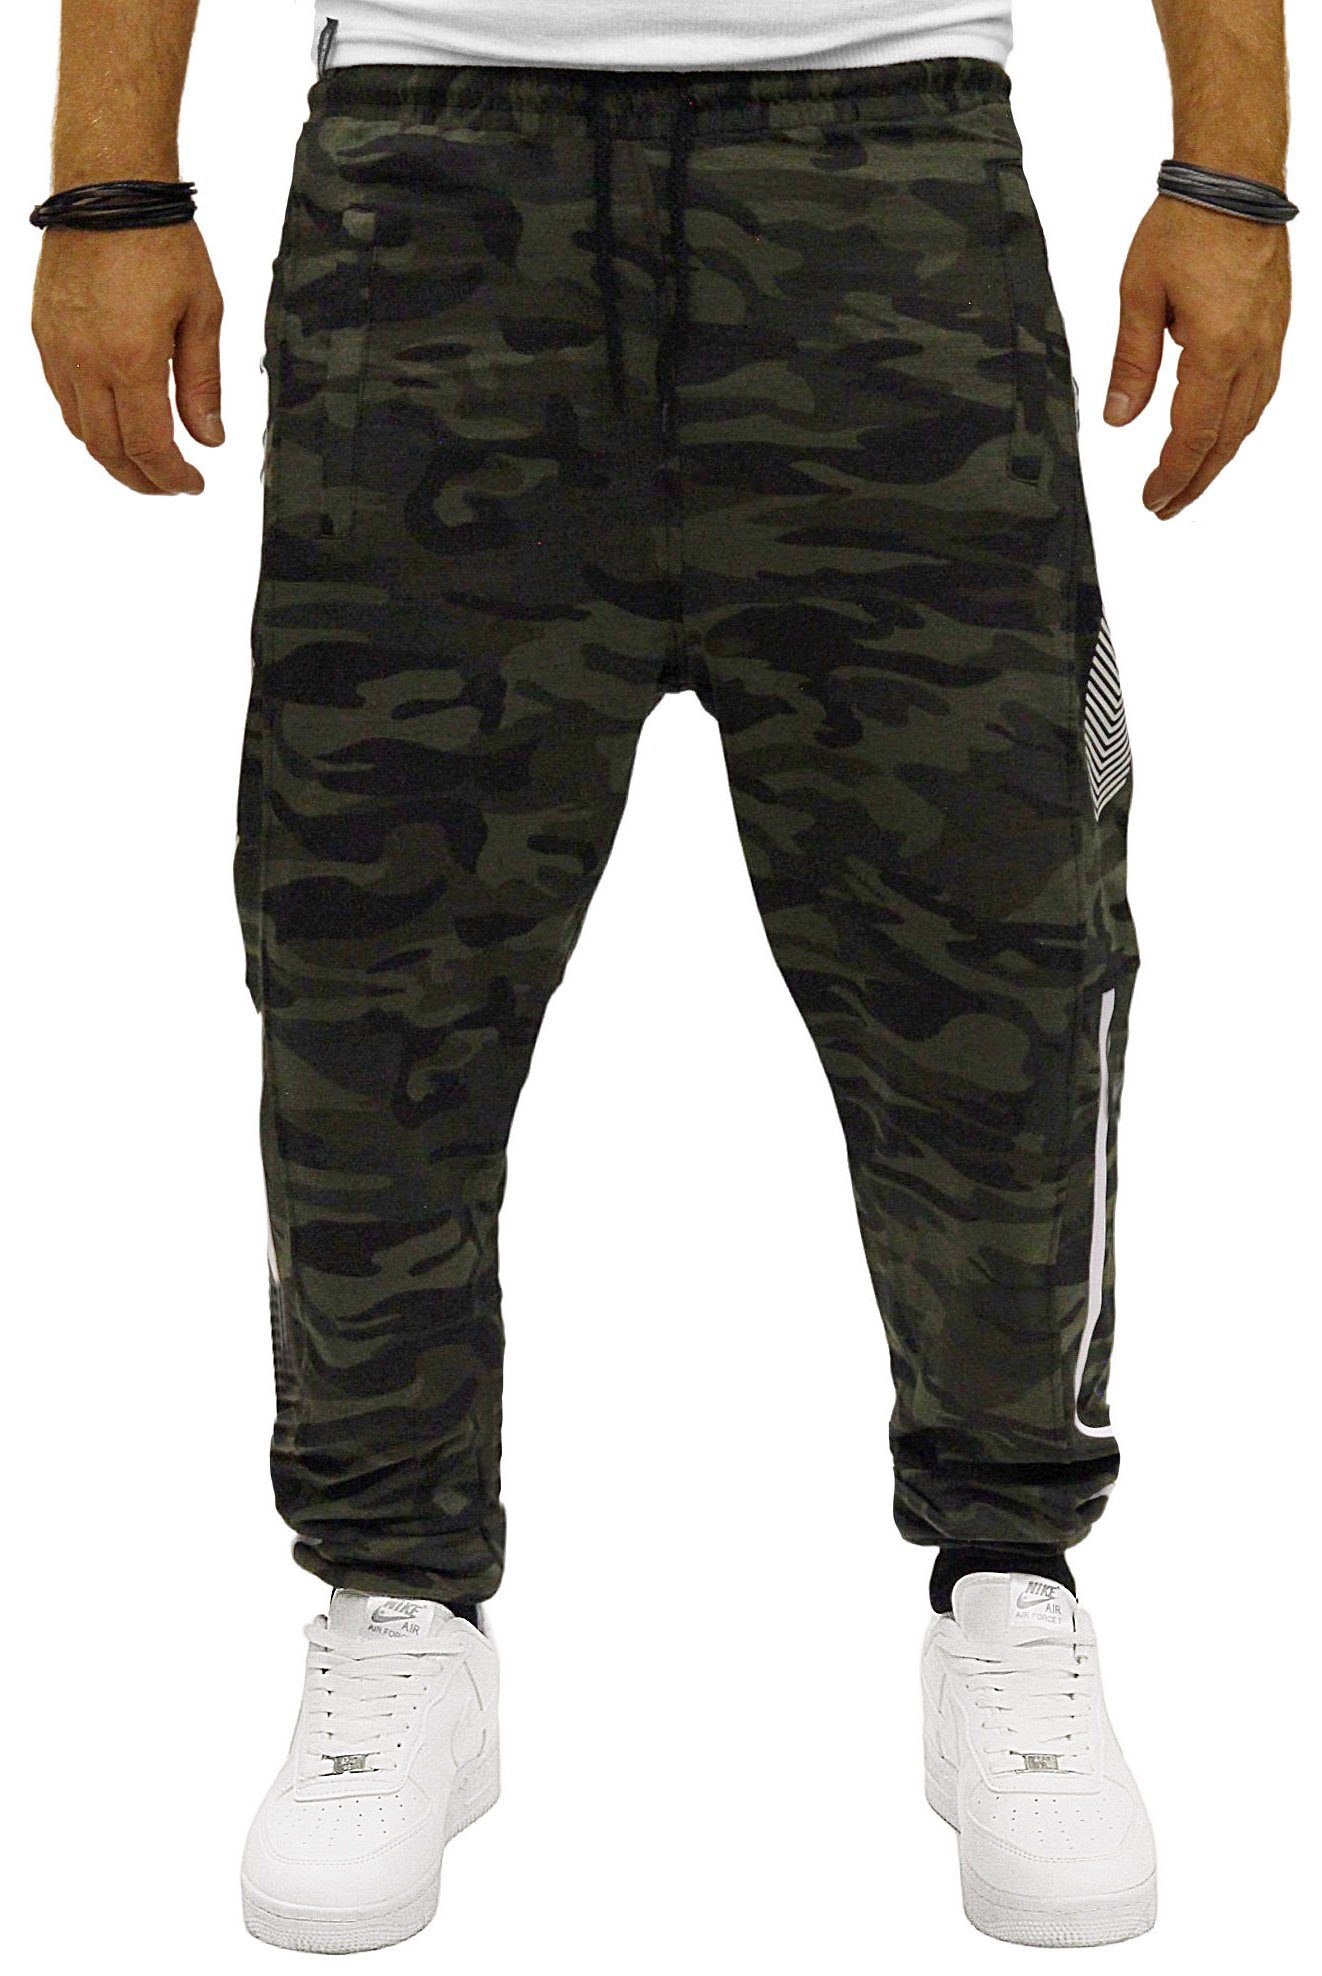 RMK Jogginghose Herren Trainingshose Fitnesshose Tarn Hose Army Camouflage (024) Camouflage-Dunkel